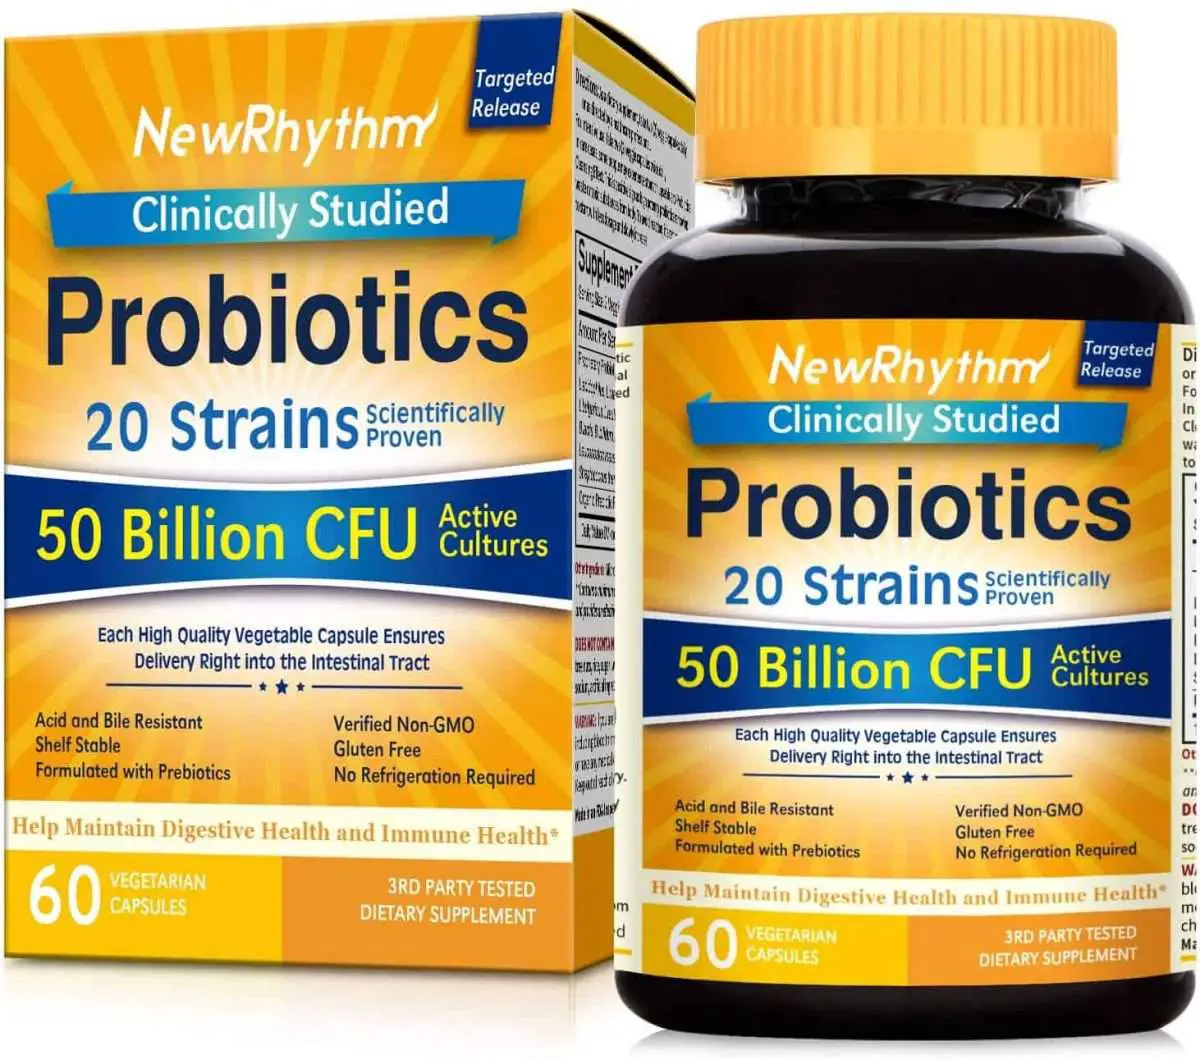 NewRhythm Probiotics 50 Billion CFU Probiotic Supplement Review